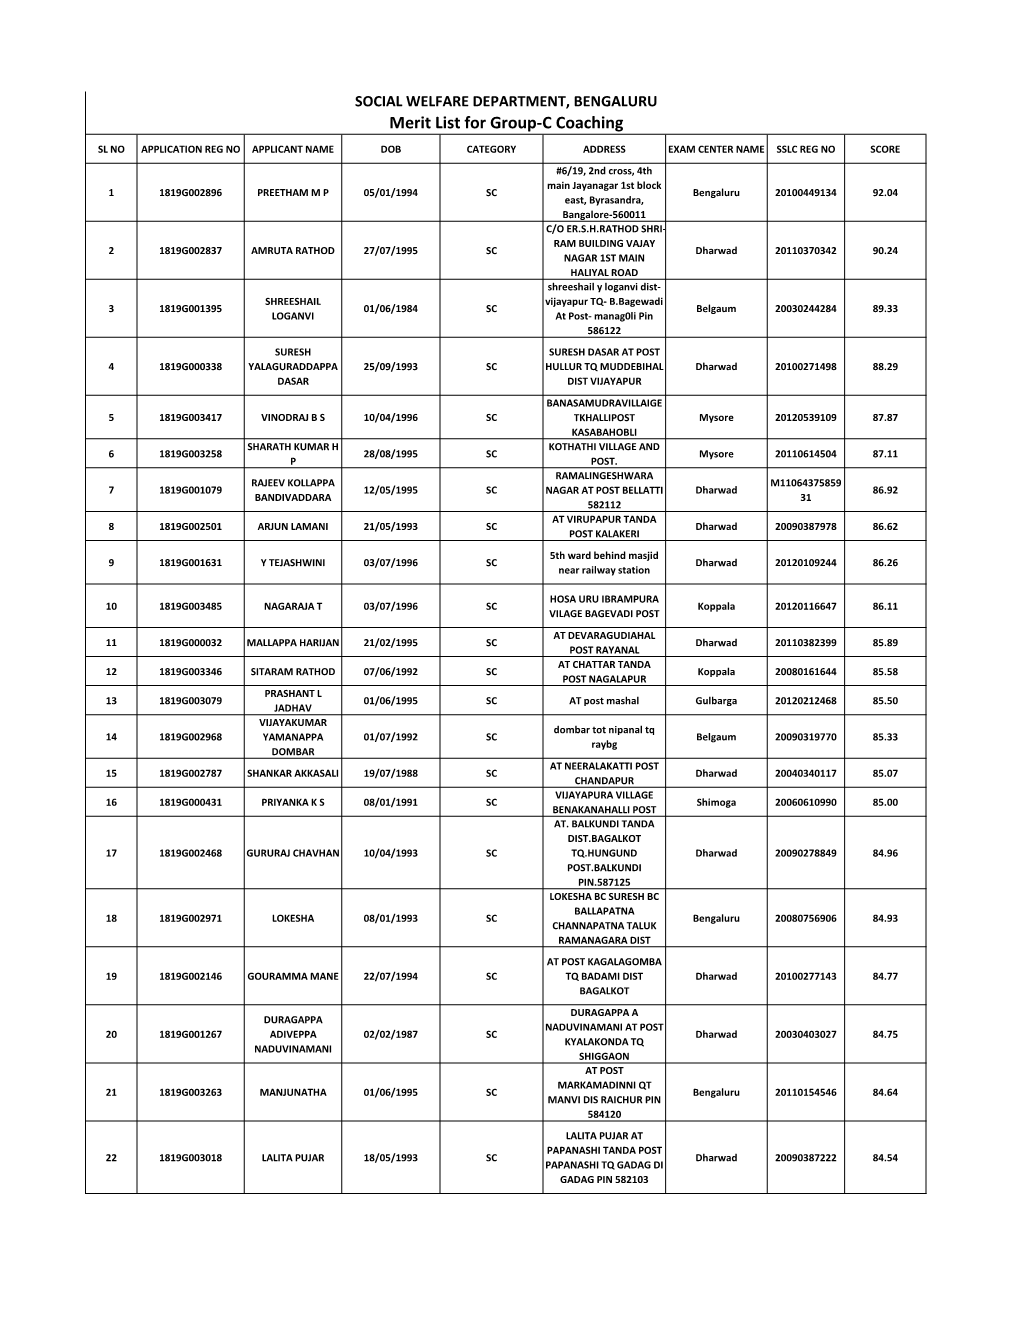 Merit List for Group-C Coaching